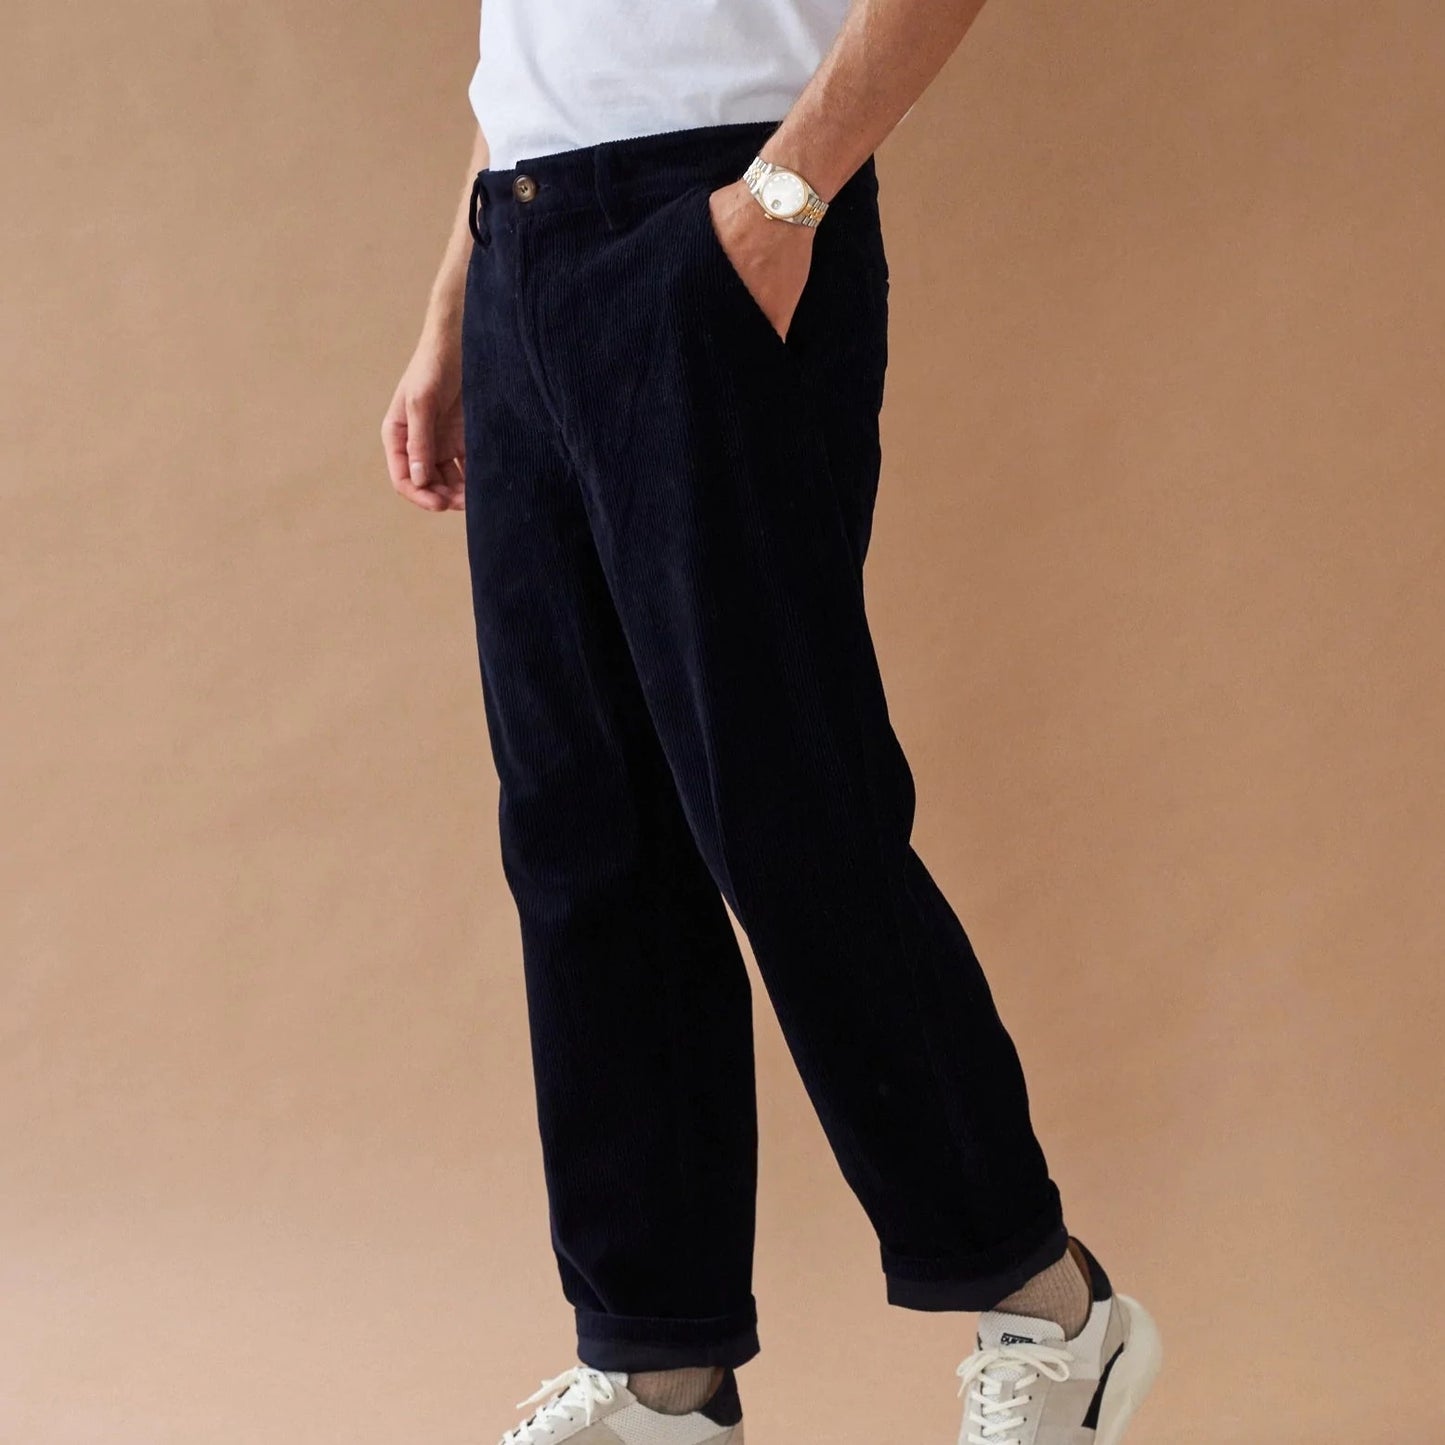 Two Smart Casual Ways To Rock White Corduroy Pants This Season – Men's  Style Pro | Men's Style Blog & Shop